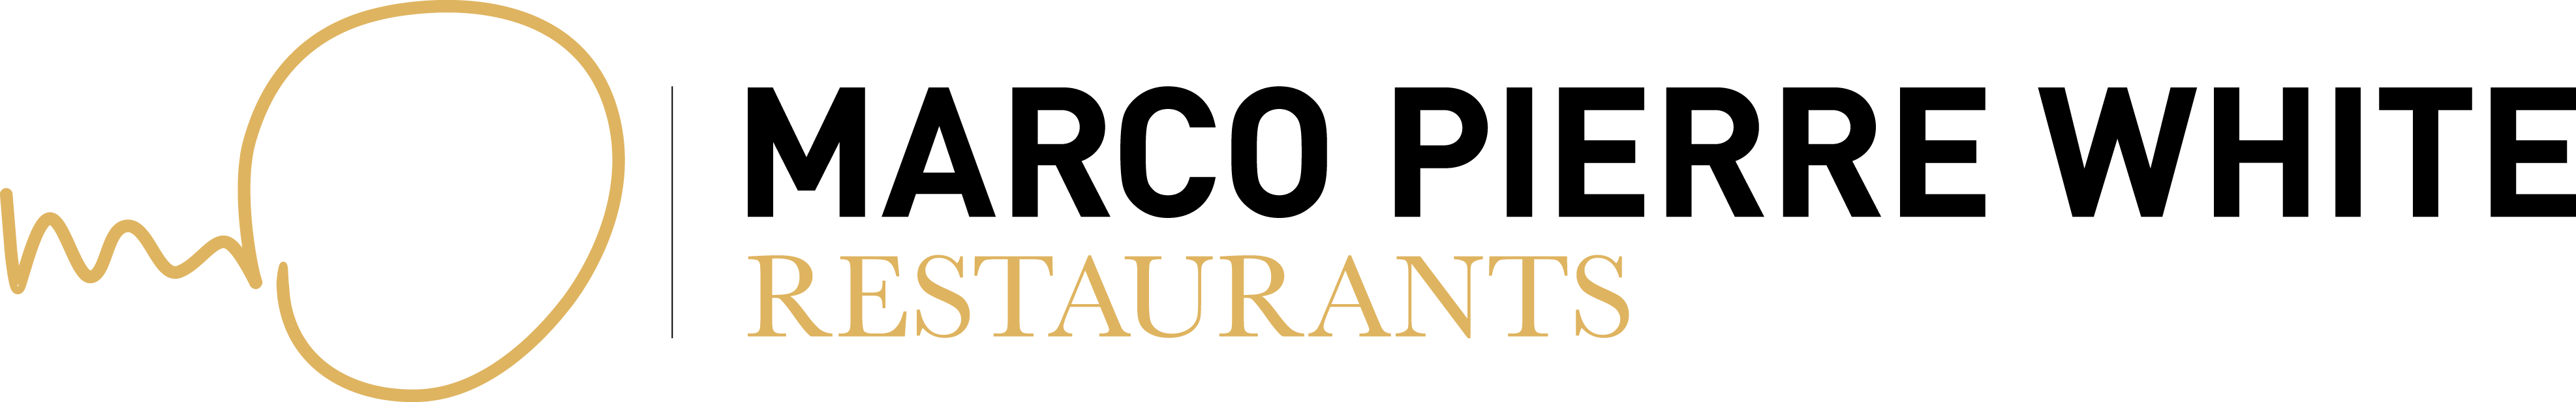 MPW_Restaurants_Logo-01-1